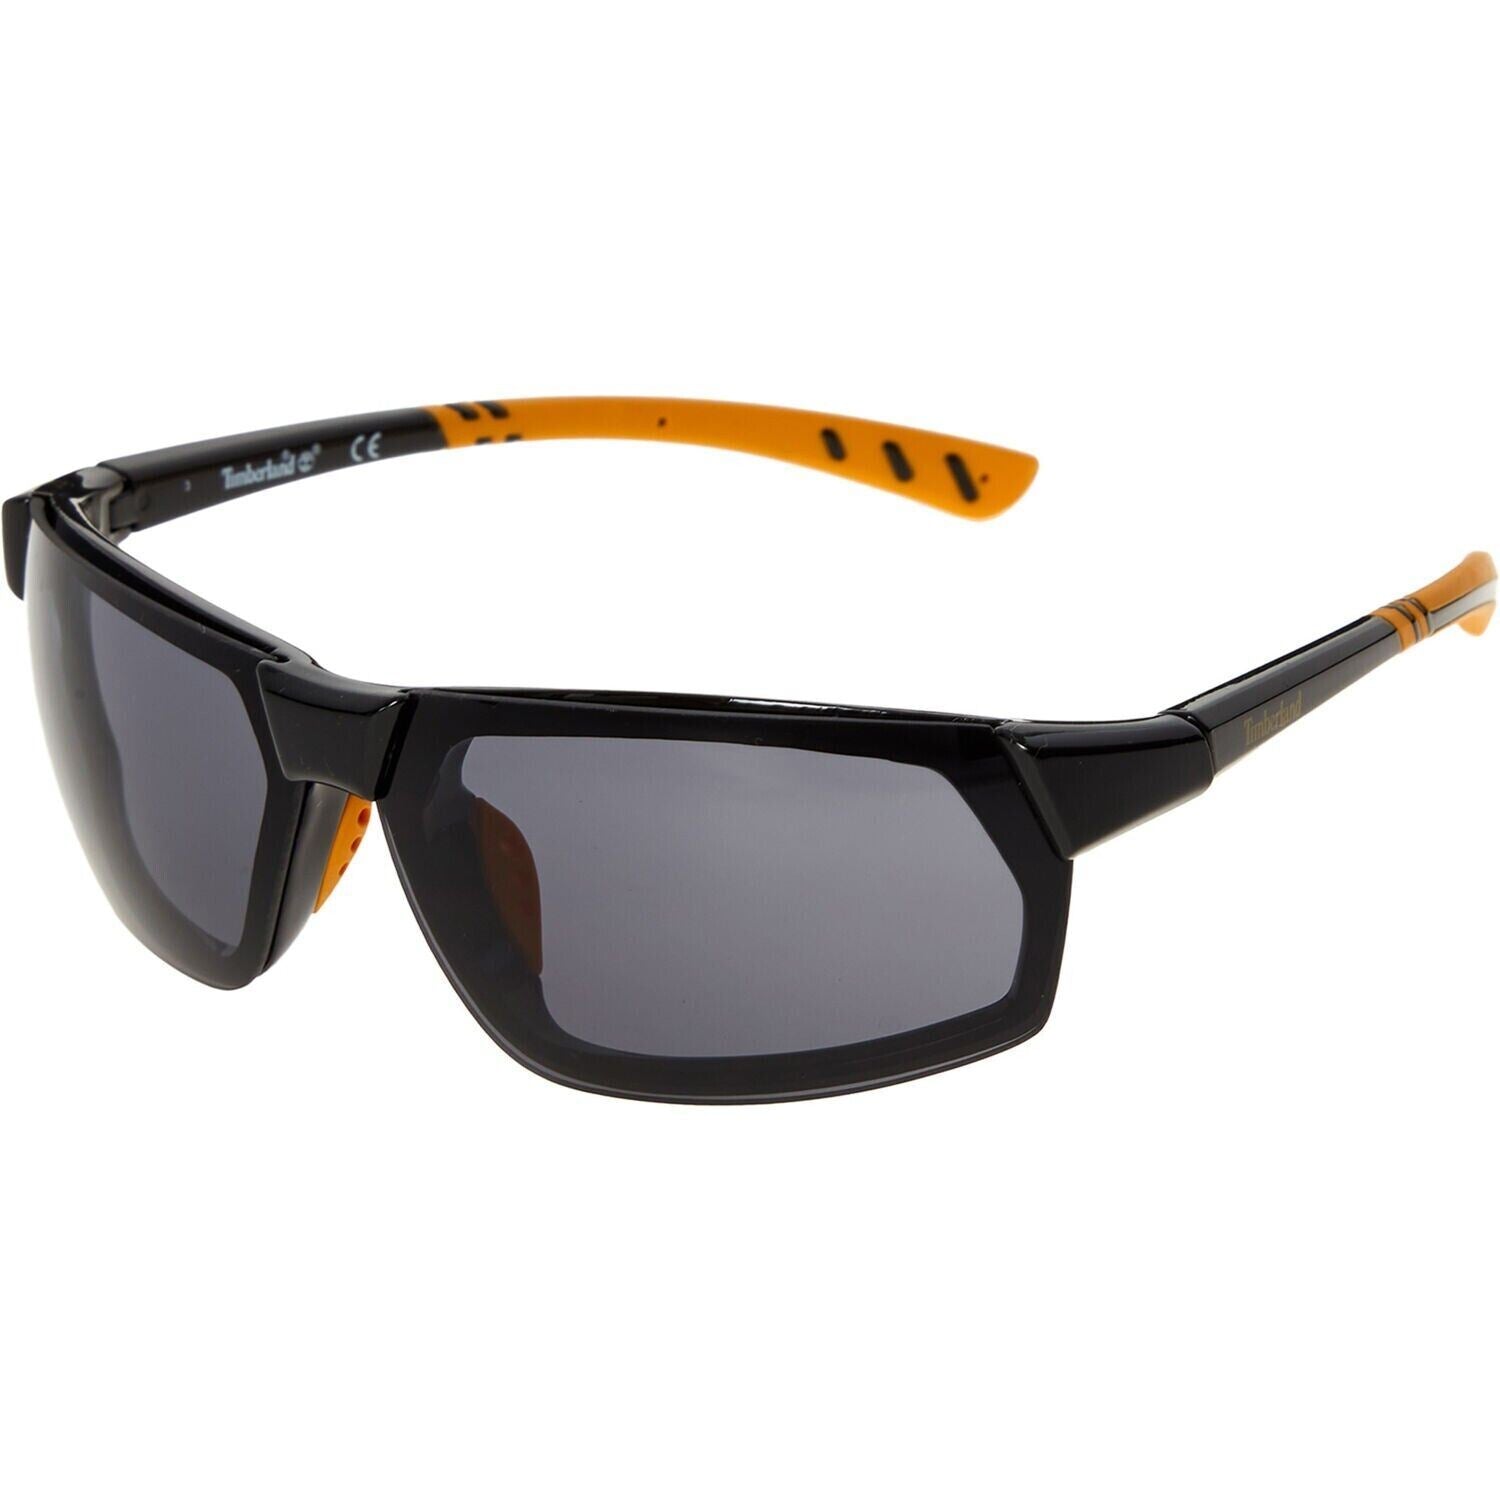 TIMBERLAND Men's Black & Yellow Wrap Sunglasses, TB7219